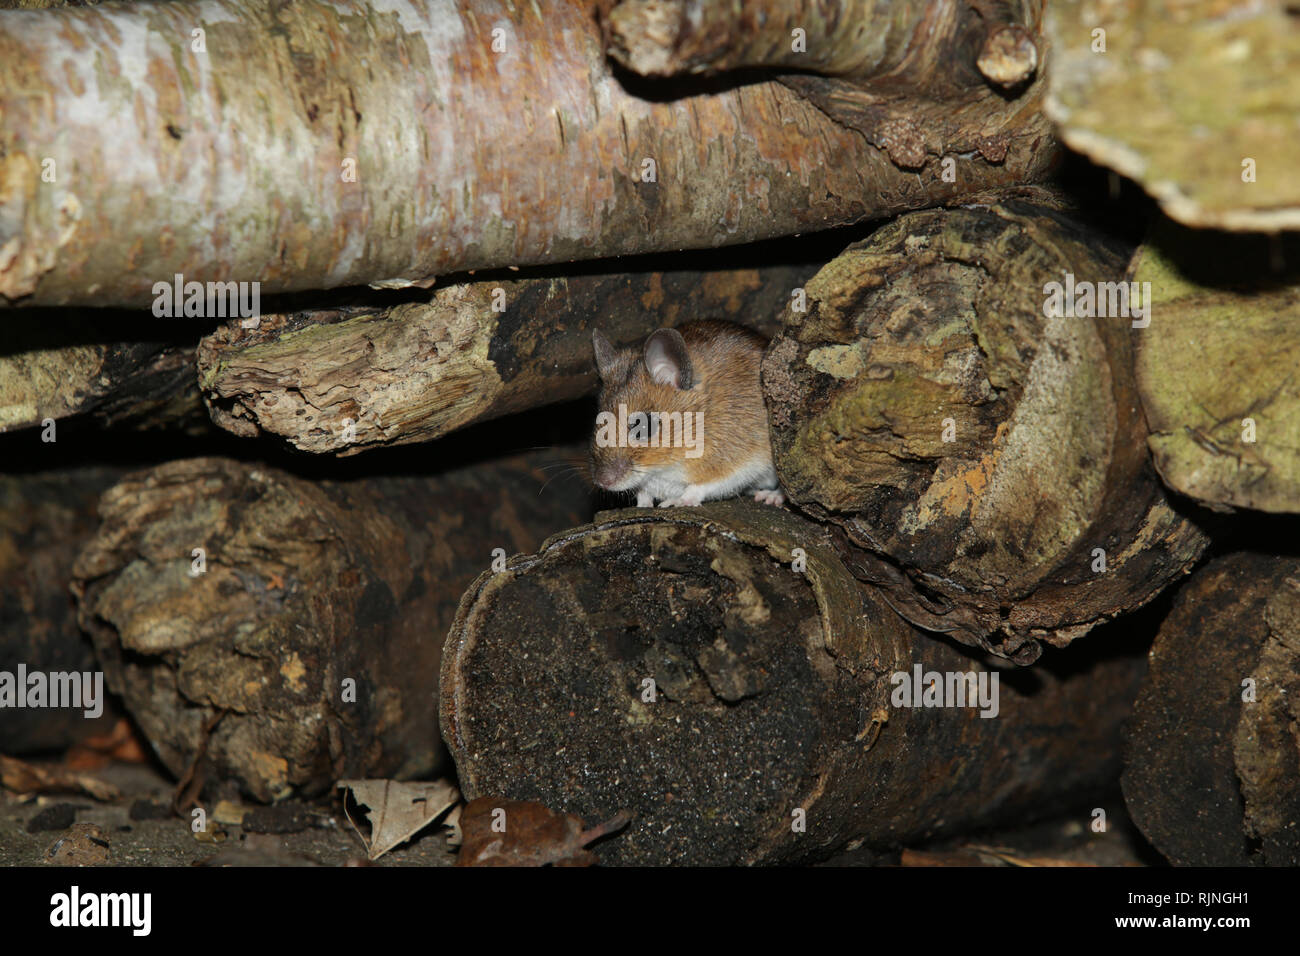 Un ratón de madera silvestre (Apodemus sylvaticus) escondido en un montón de madera creada en un jardín británico para atraer la vida silvestre. Foto de stock